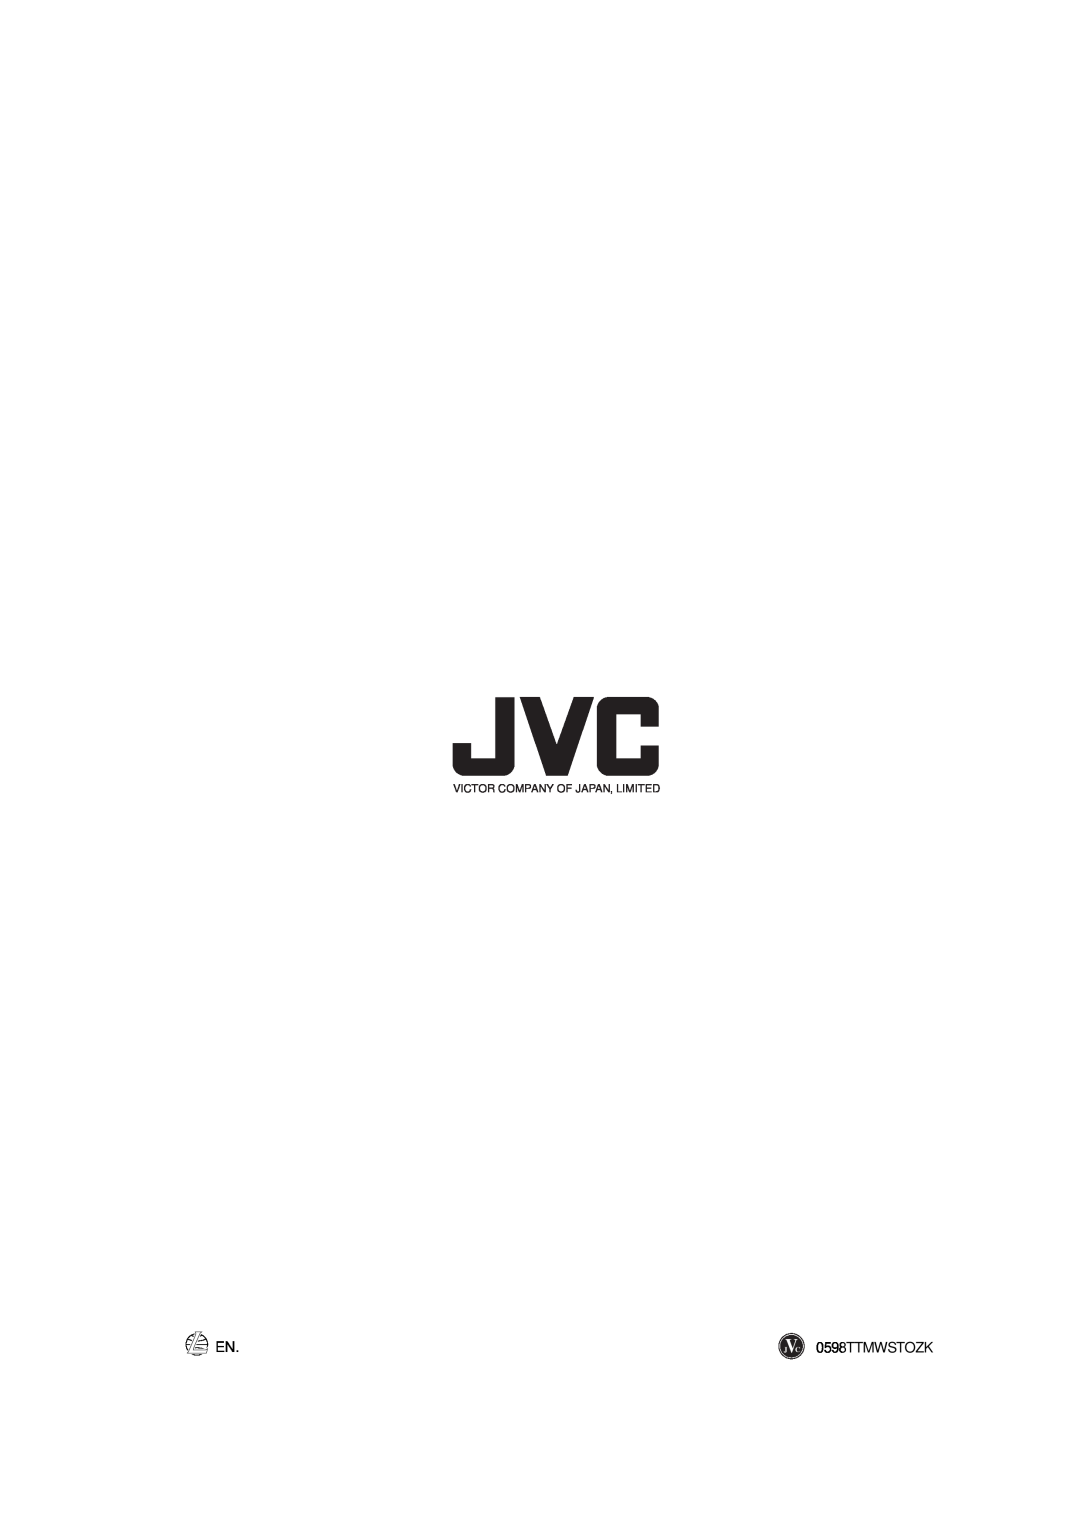 JVC XM-EX90 manual JVC 0598TTMWSTOZK, Victor Company Of Japan, Limited 